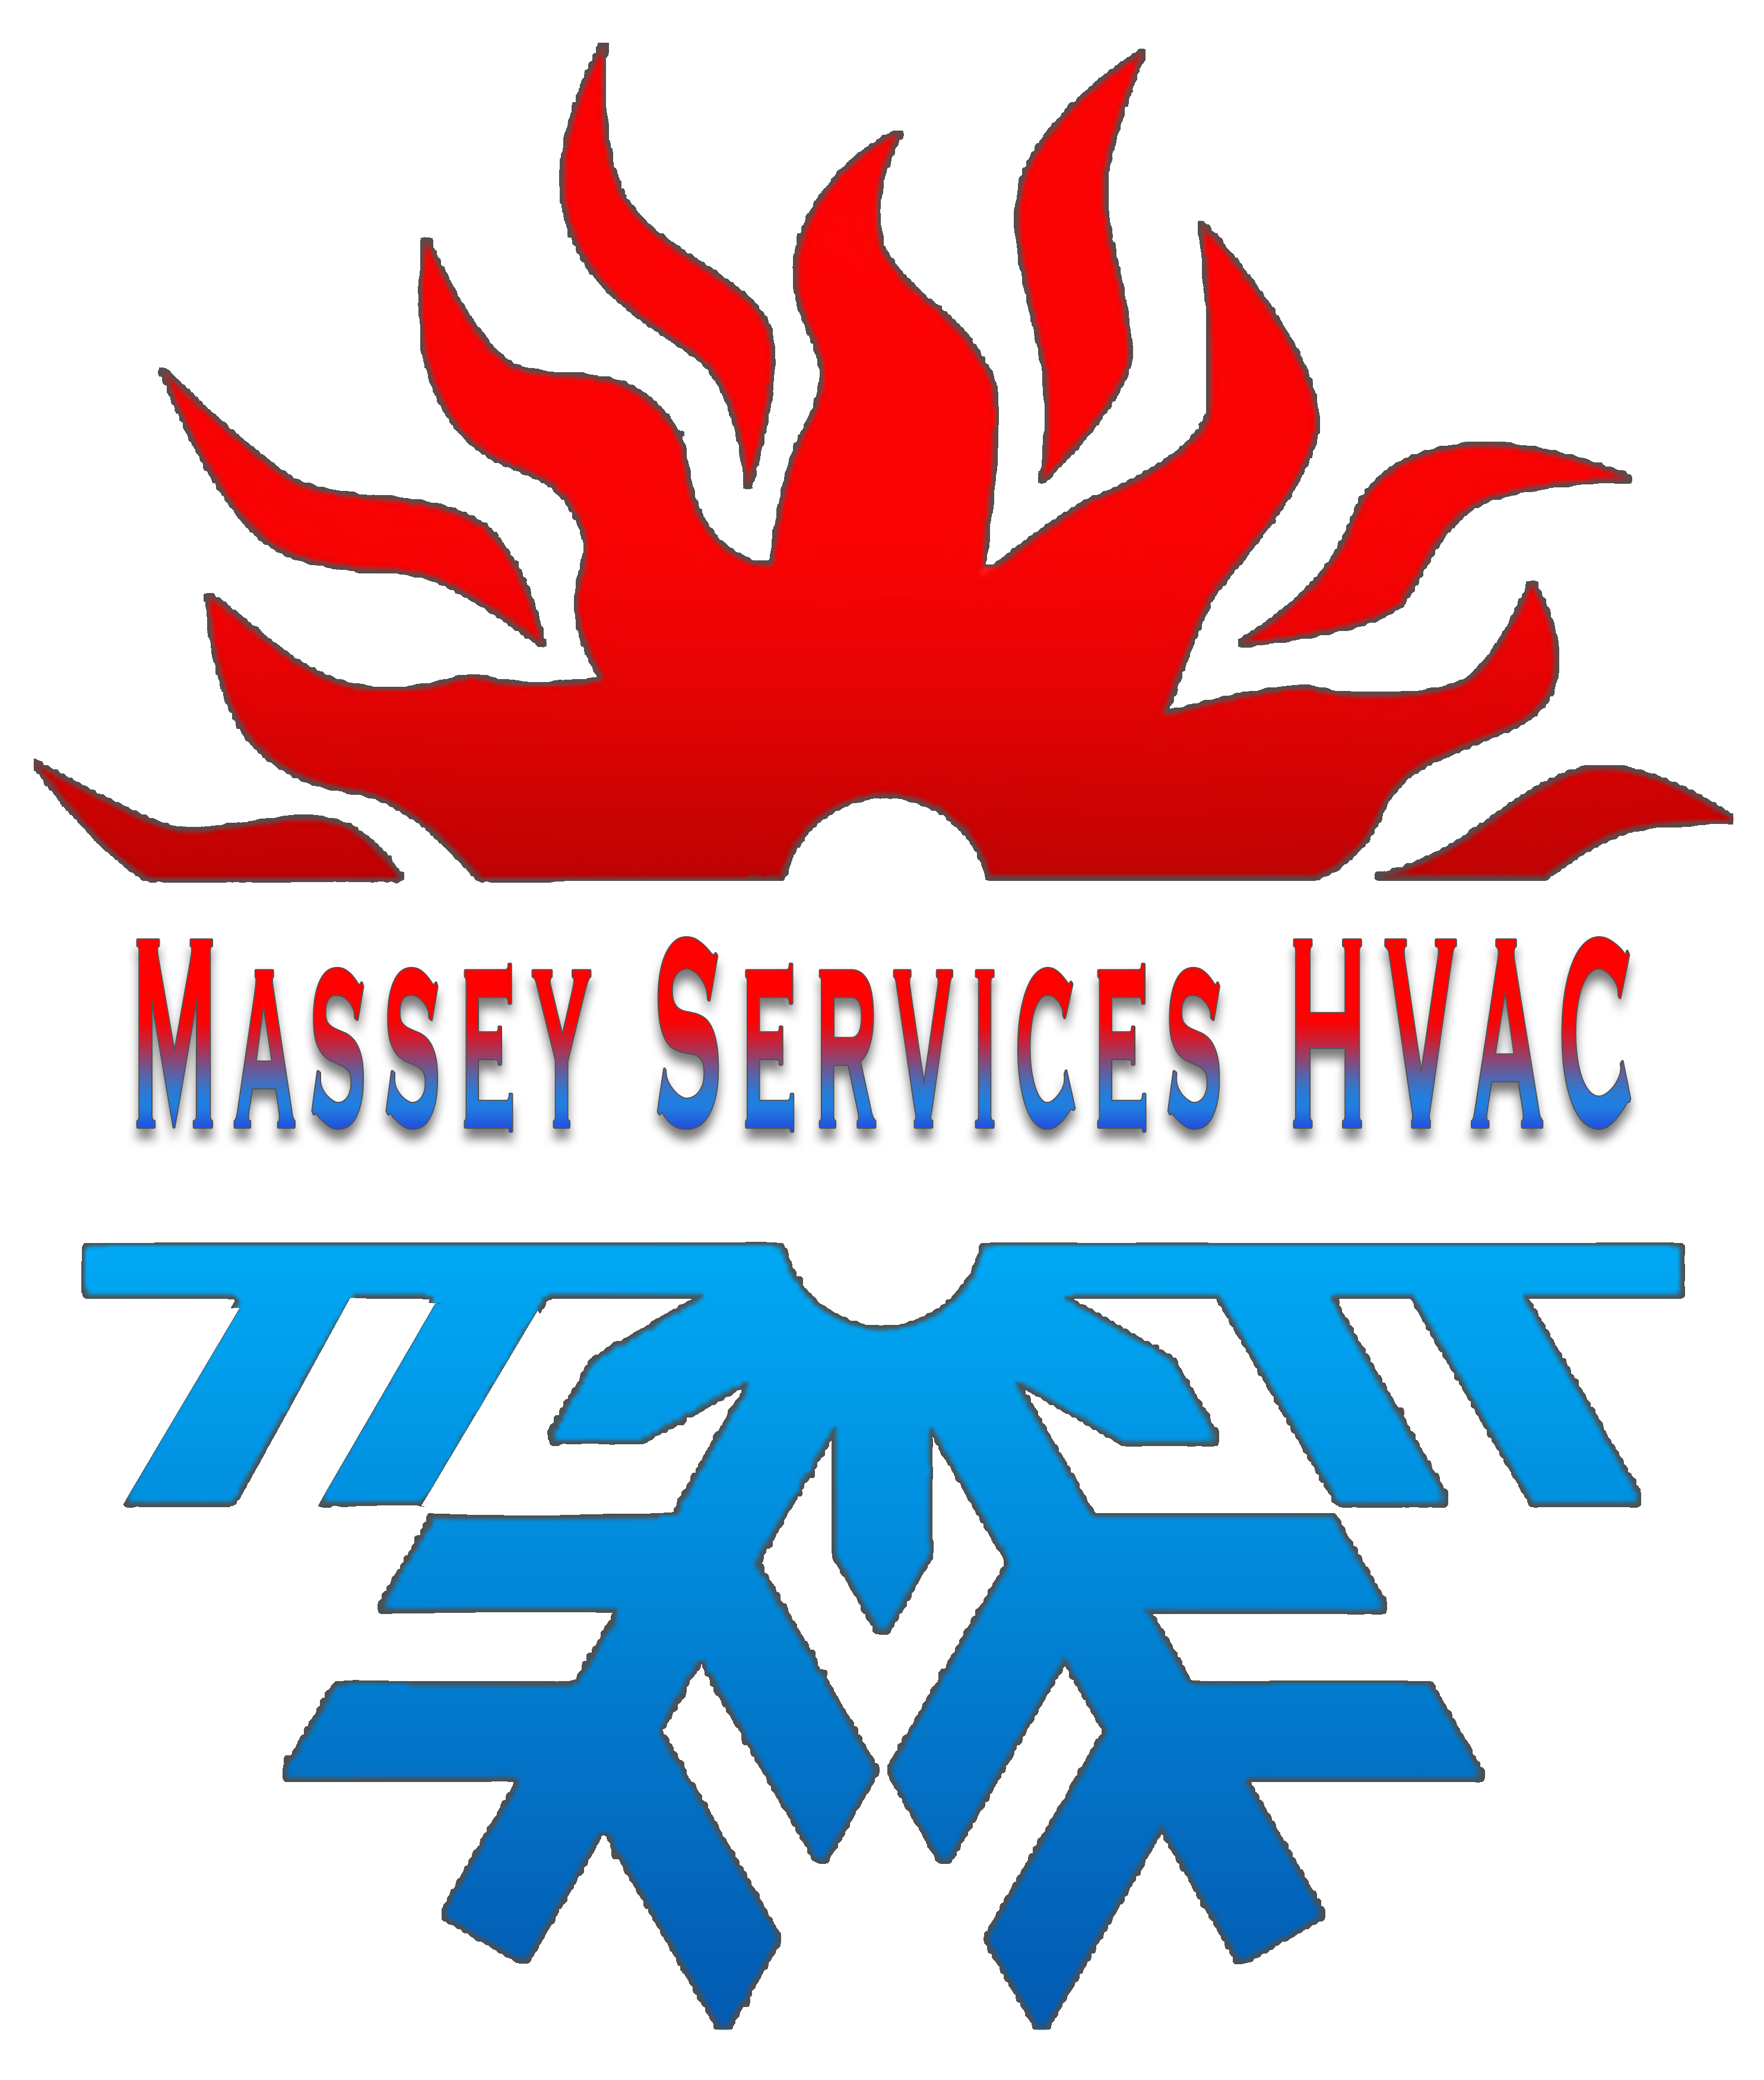 Massey Services HVAC